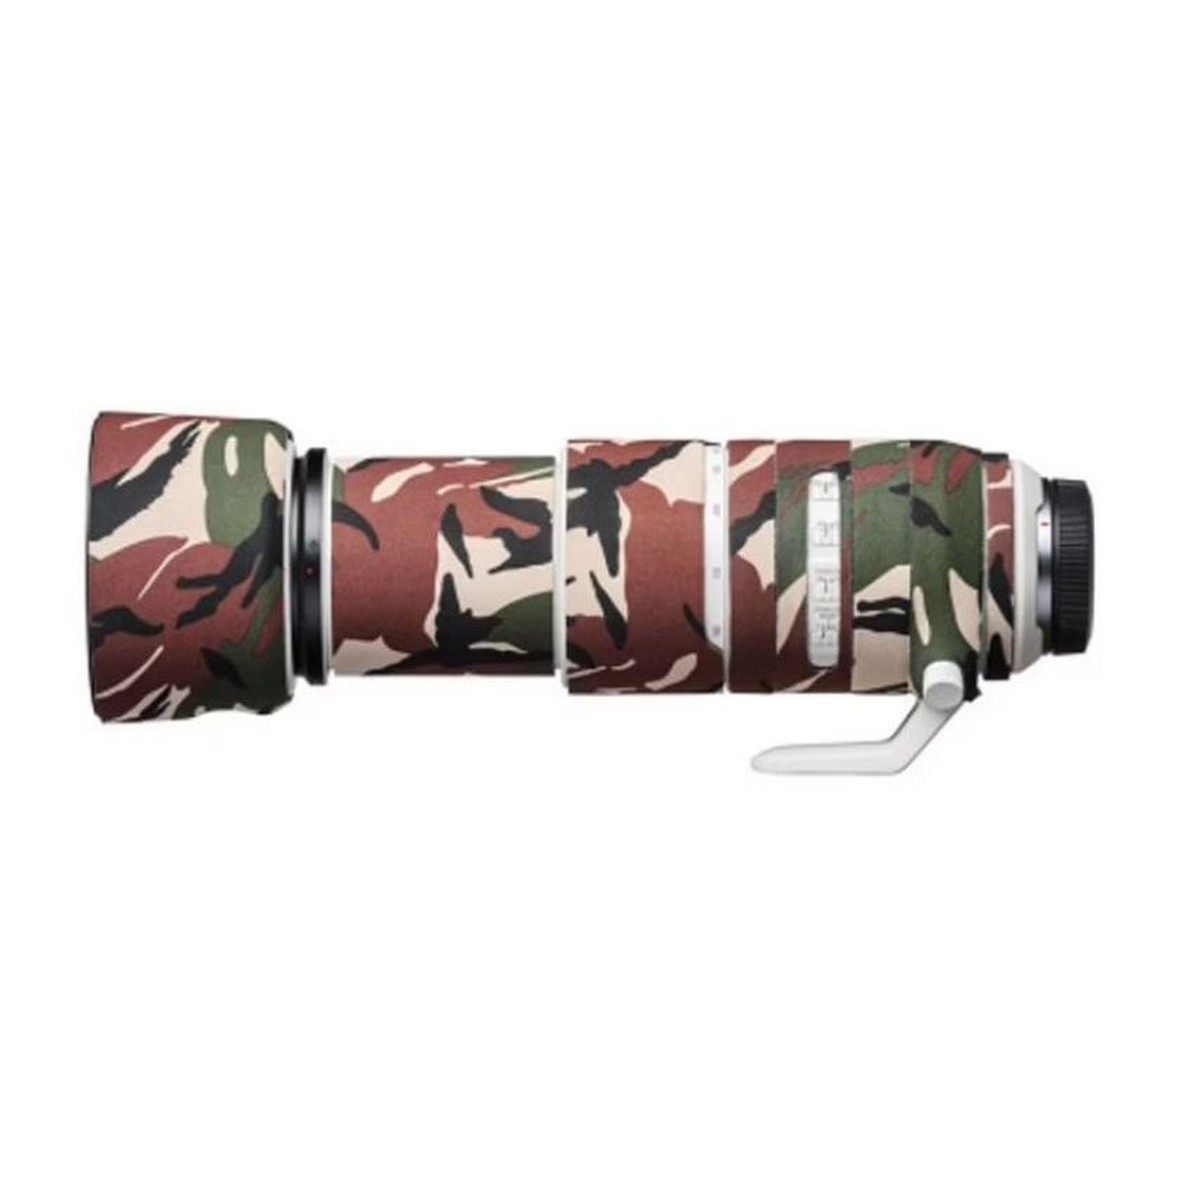 Easycover Lens Oak Objektivschutz für Canon RF 100-500 mm 1:4,5-7,1L IS USM Grün Camouflage